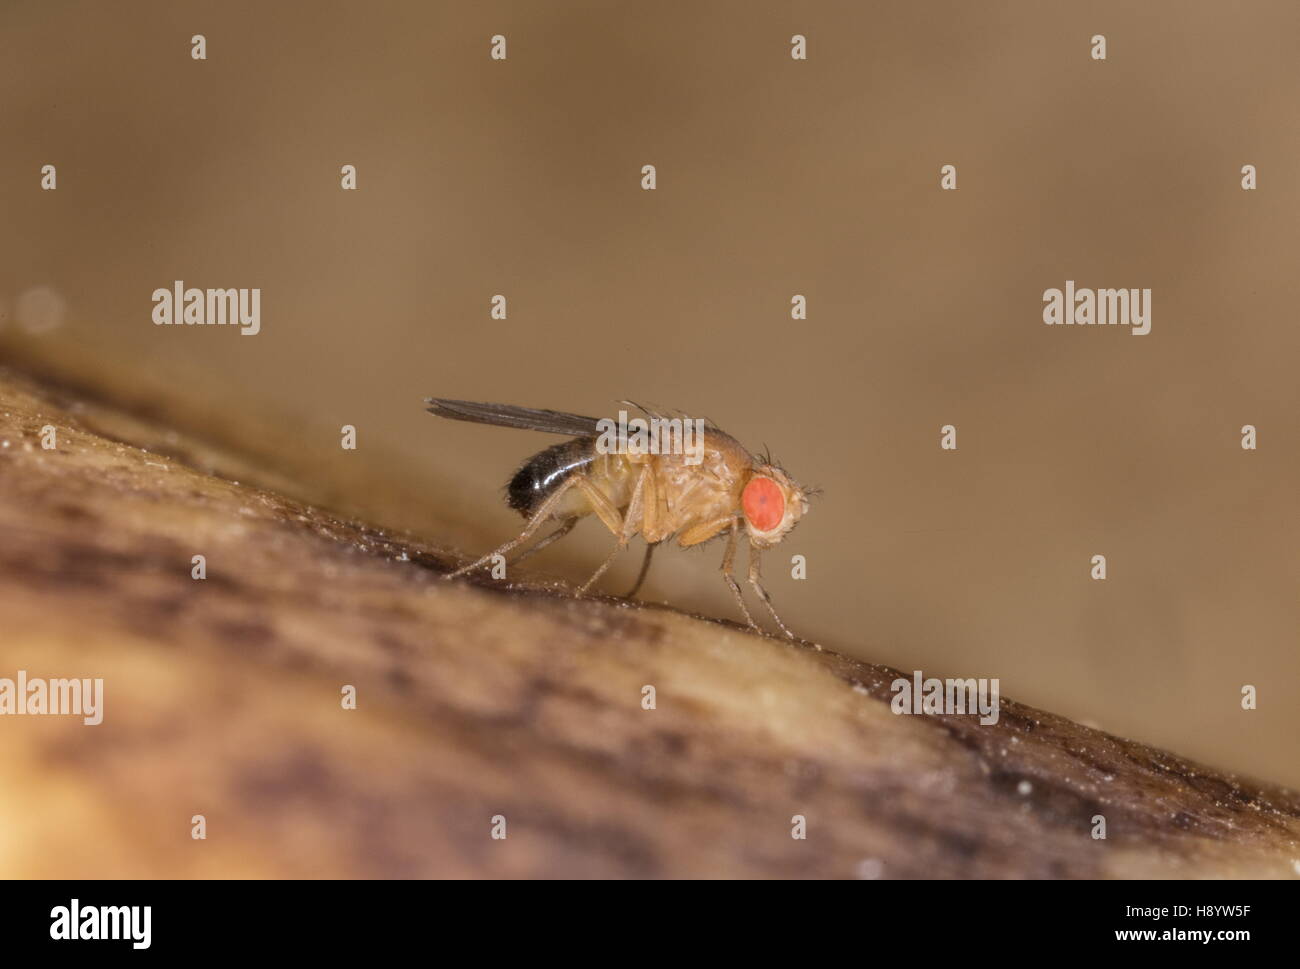 Male Common fruit fly, Drosophila melanogaster, on rotting bananas. Stock Photo